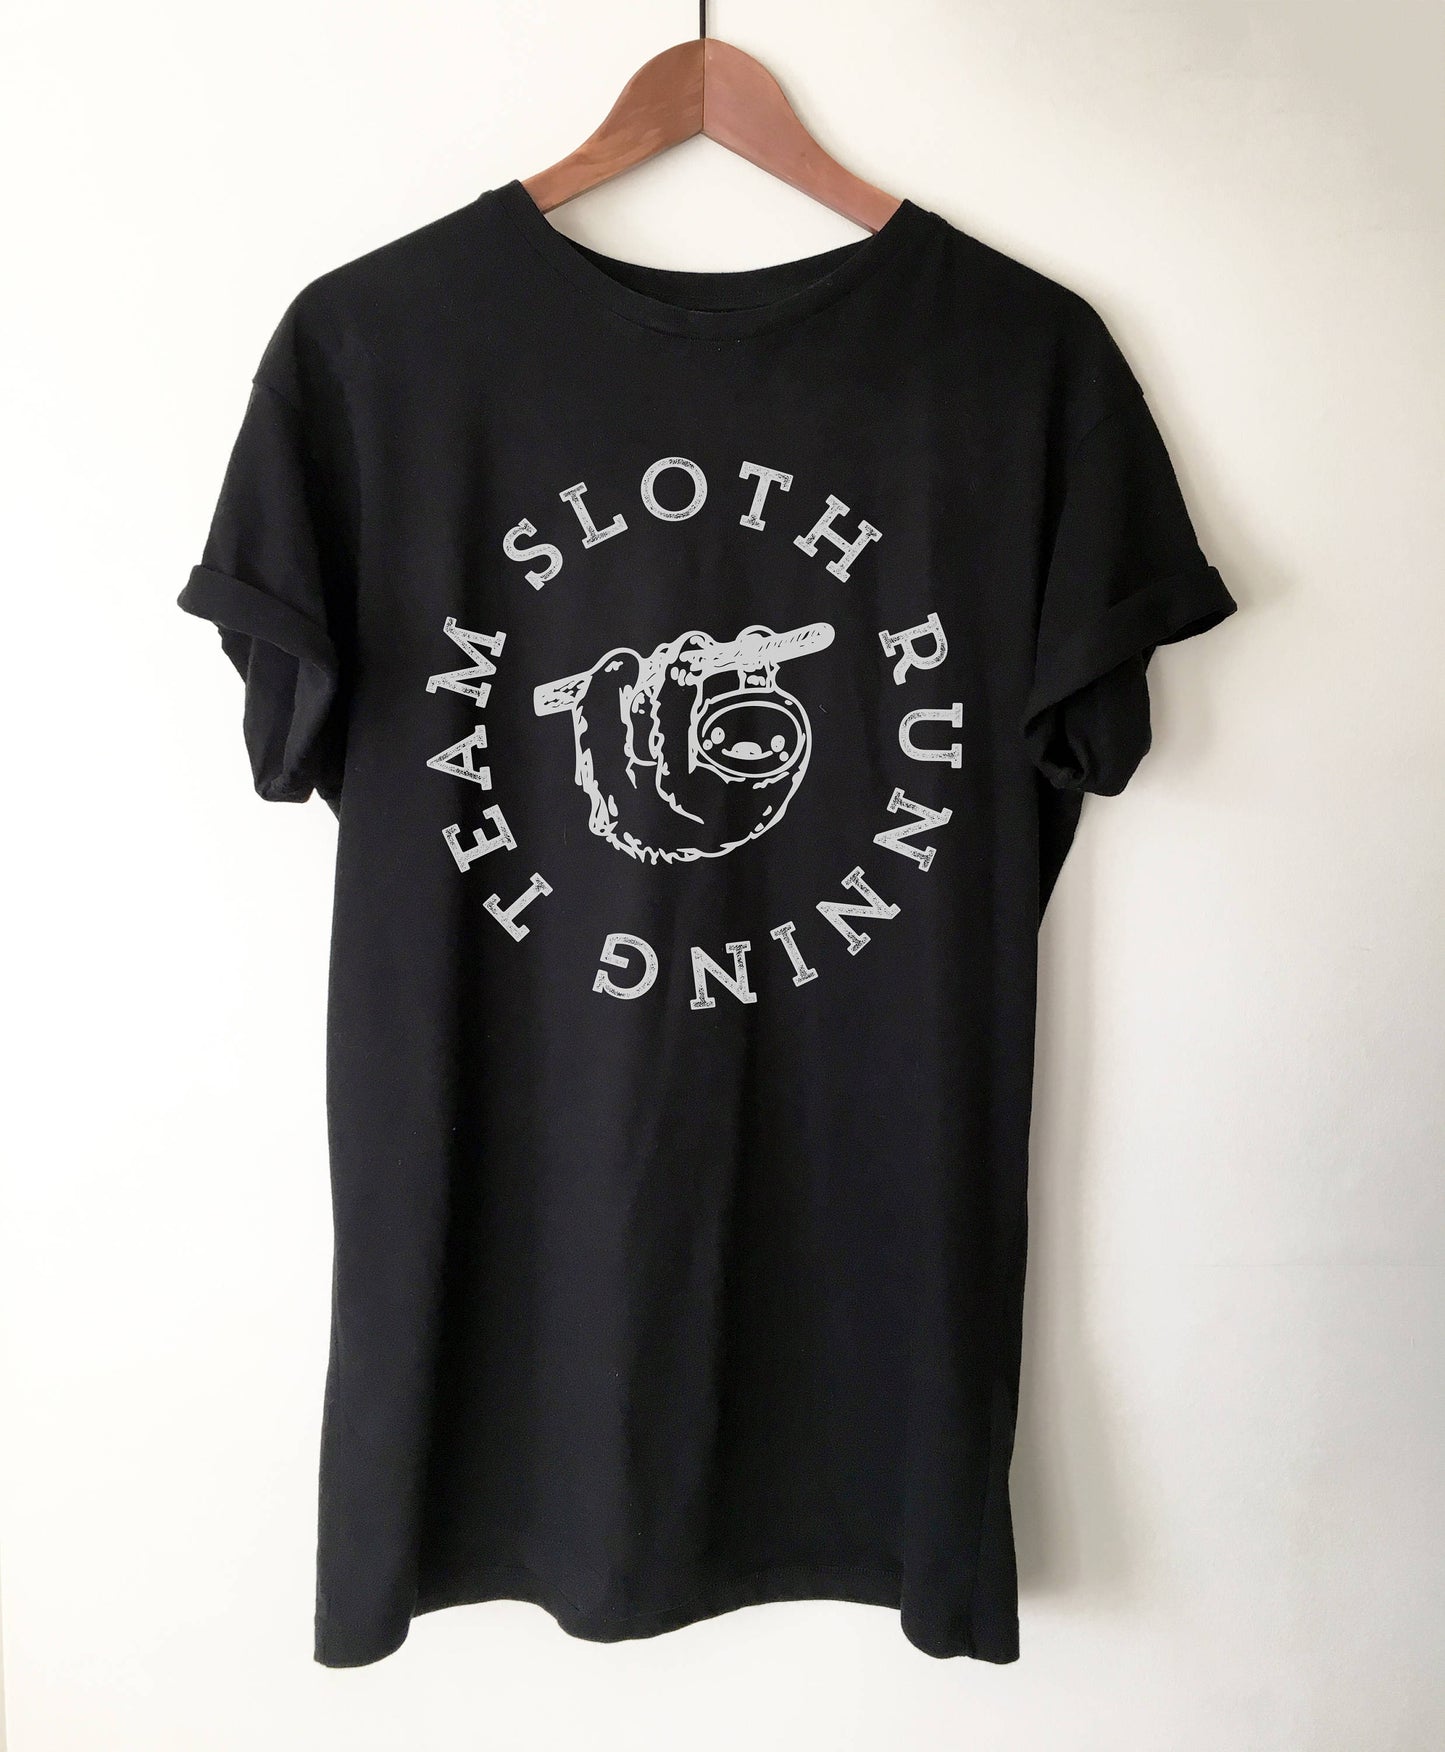 Sloth Running Team Unisex T-Shirt - Sloth Shirt - Running shirt - Running Clothes - Marathon Shirt - Race Shirt - Marathon Tops